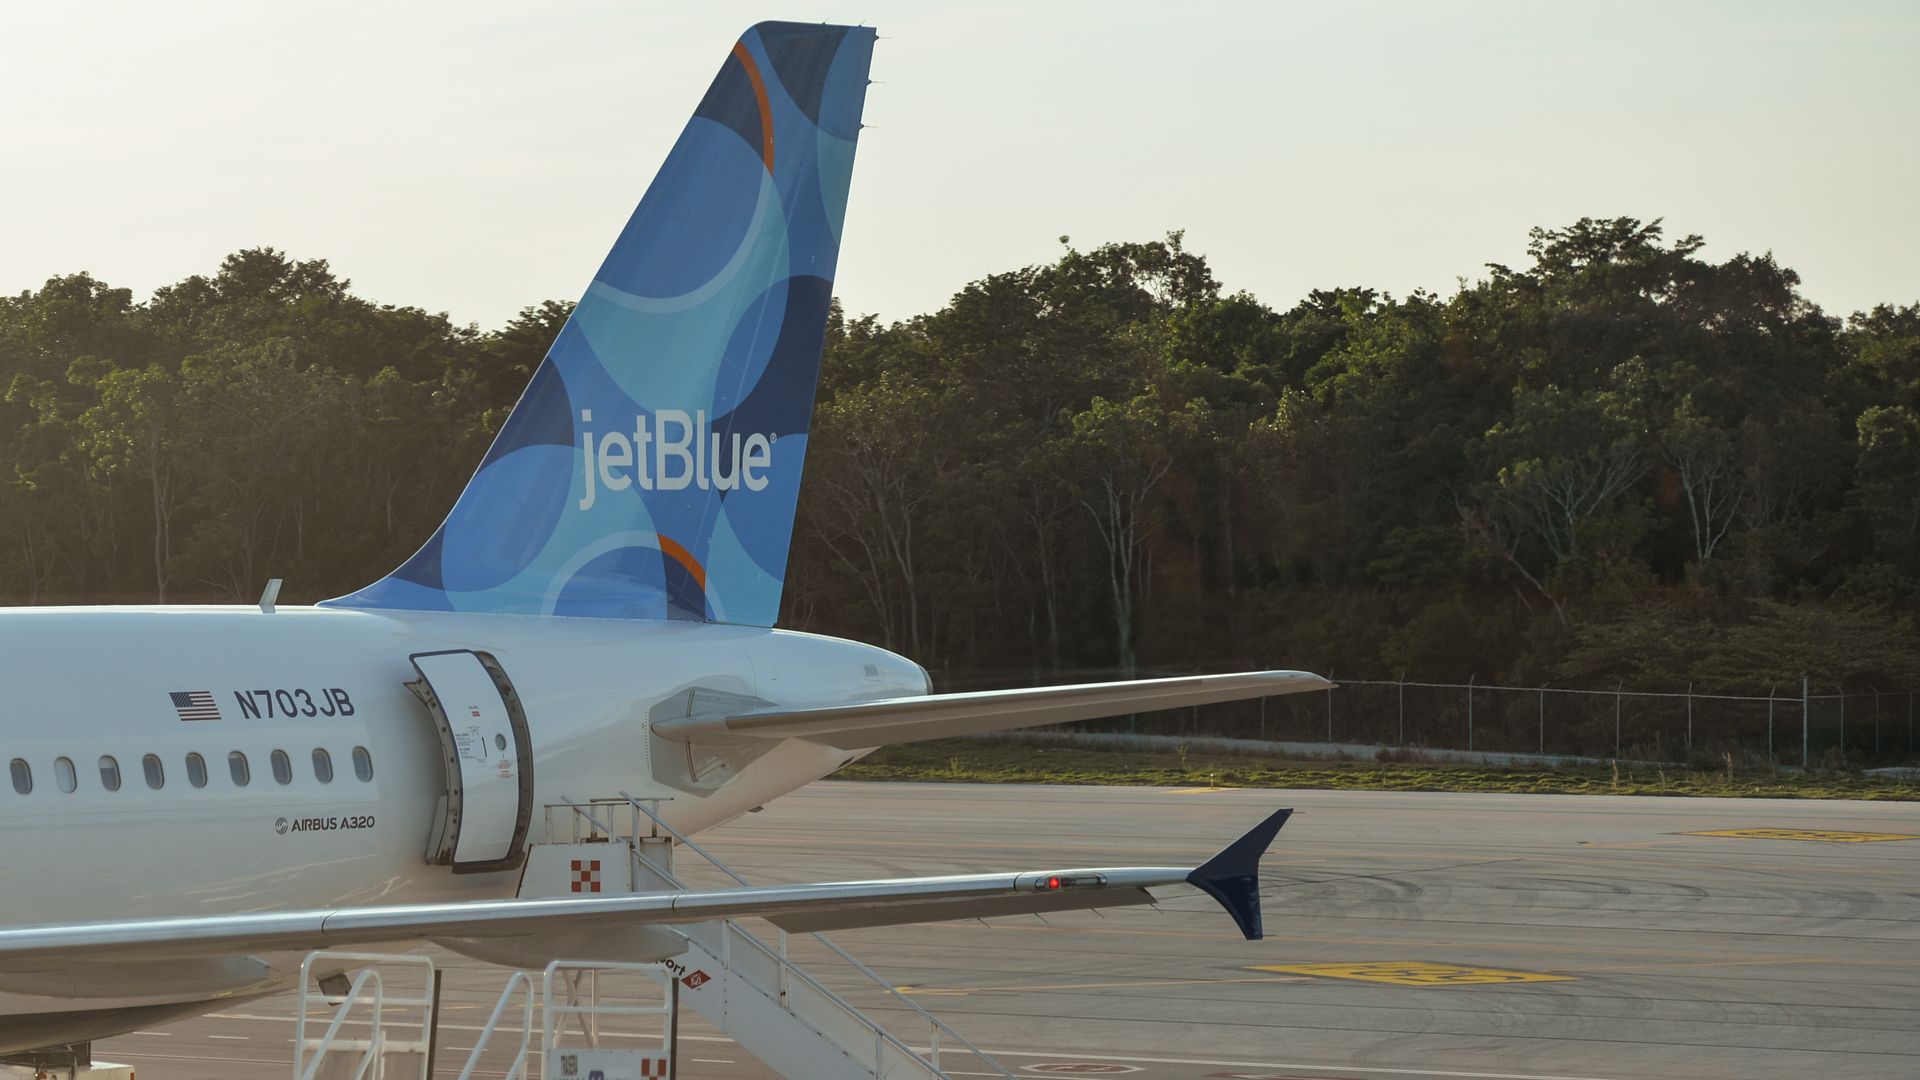 etBlue Airway plane seen at Cancun International Airport. On Wednesday, December 08, 2021, in Cancun International Airport, Cancun, Quintana Roo, Mexico.